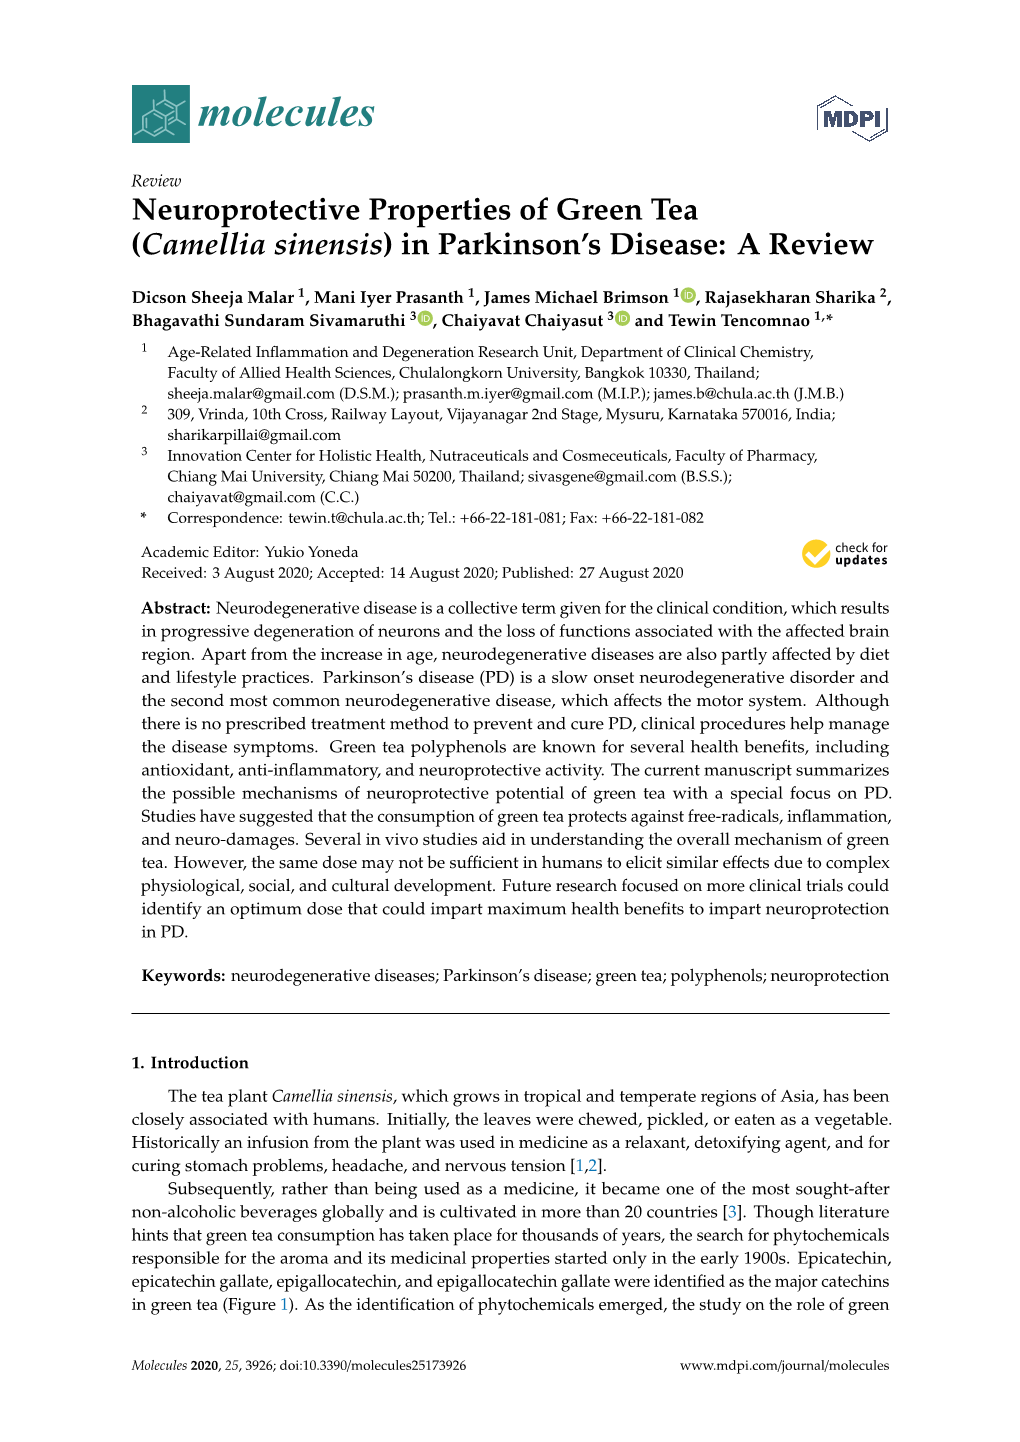 Neuroprotective Properties of Green Tea (Camellia Sinensis) in Parkinson’S Disease: a Review